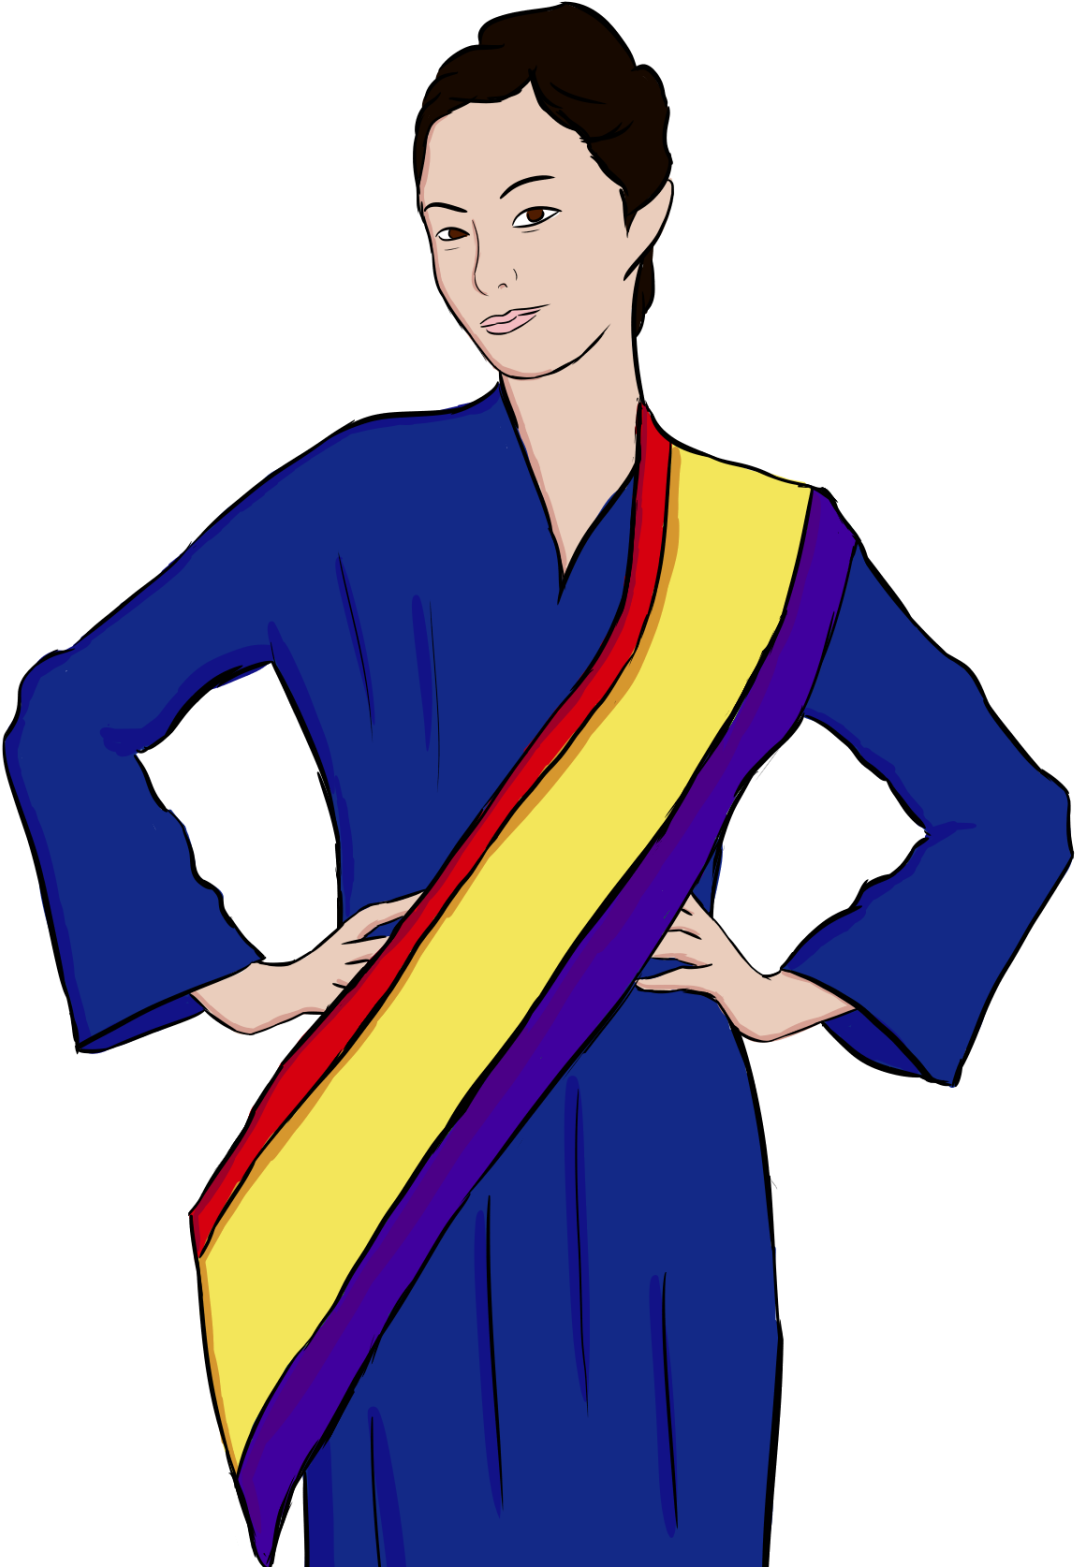 A Cartoon Of A Woman Wearing A Sash